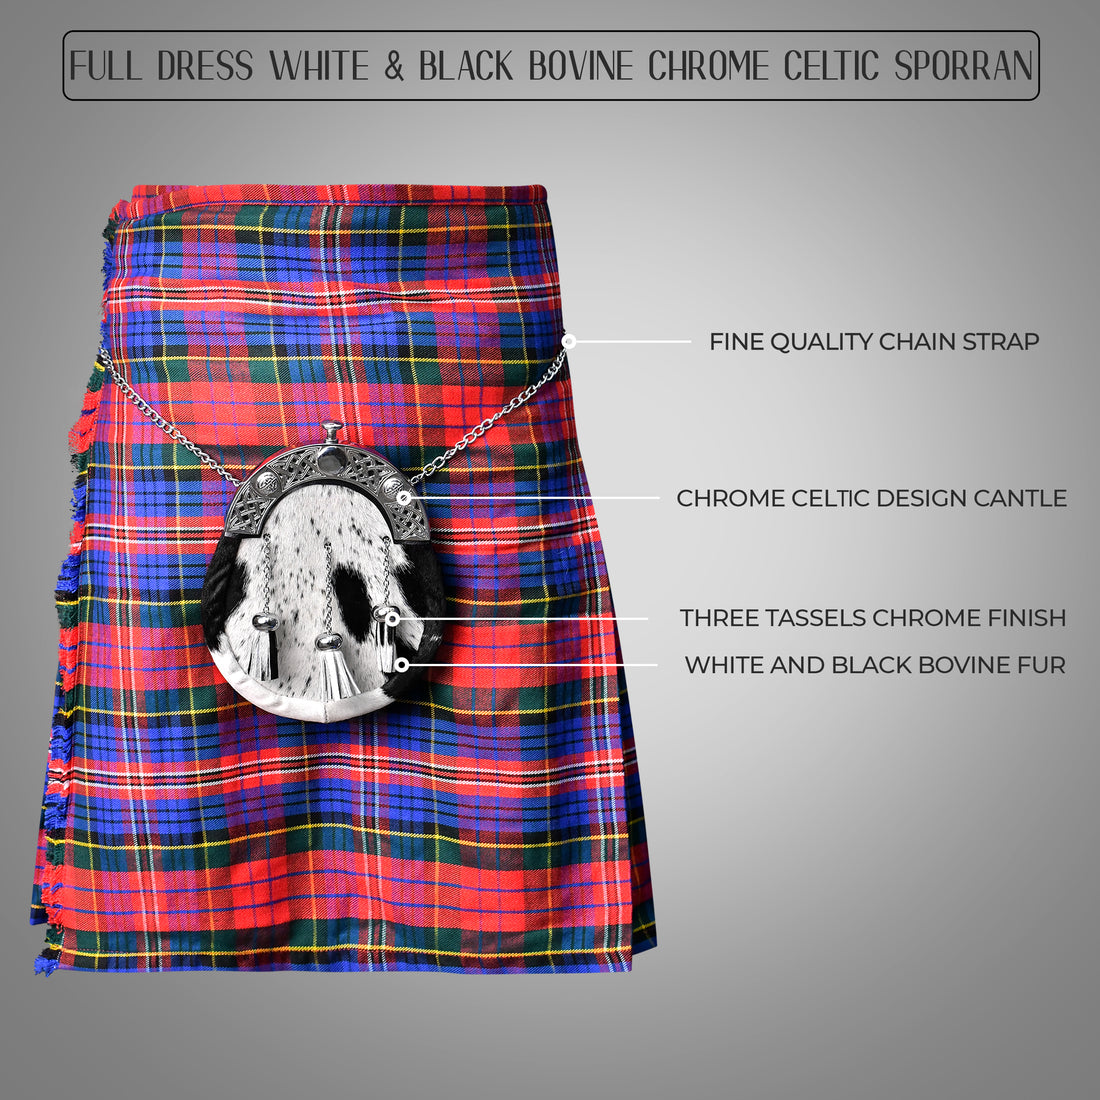 Scottish White & Black Bovine Sporran with chain belt Premium quality kilt sporran for men